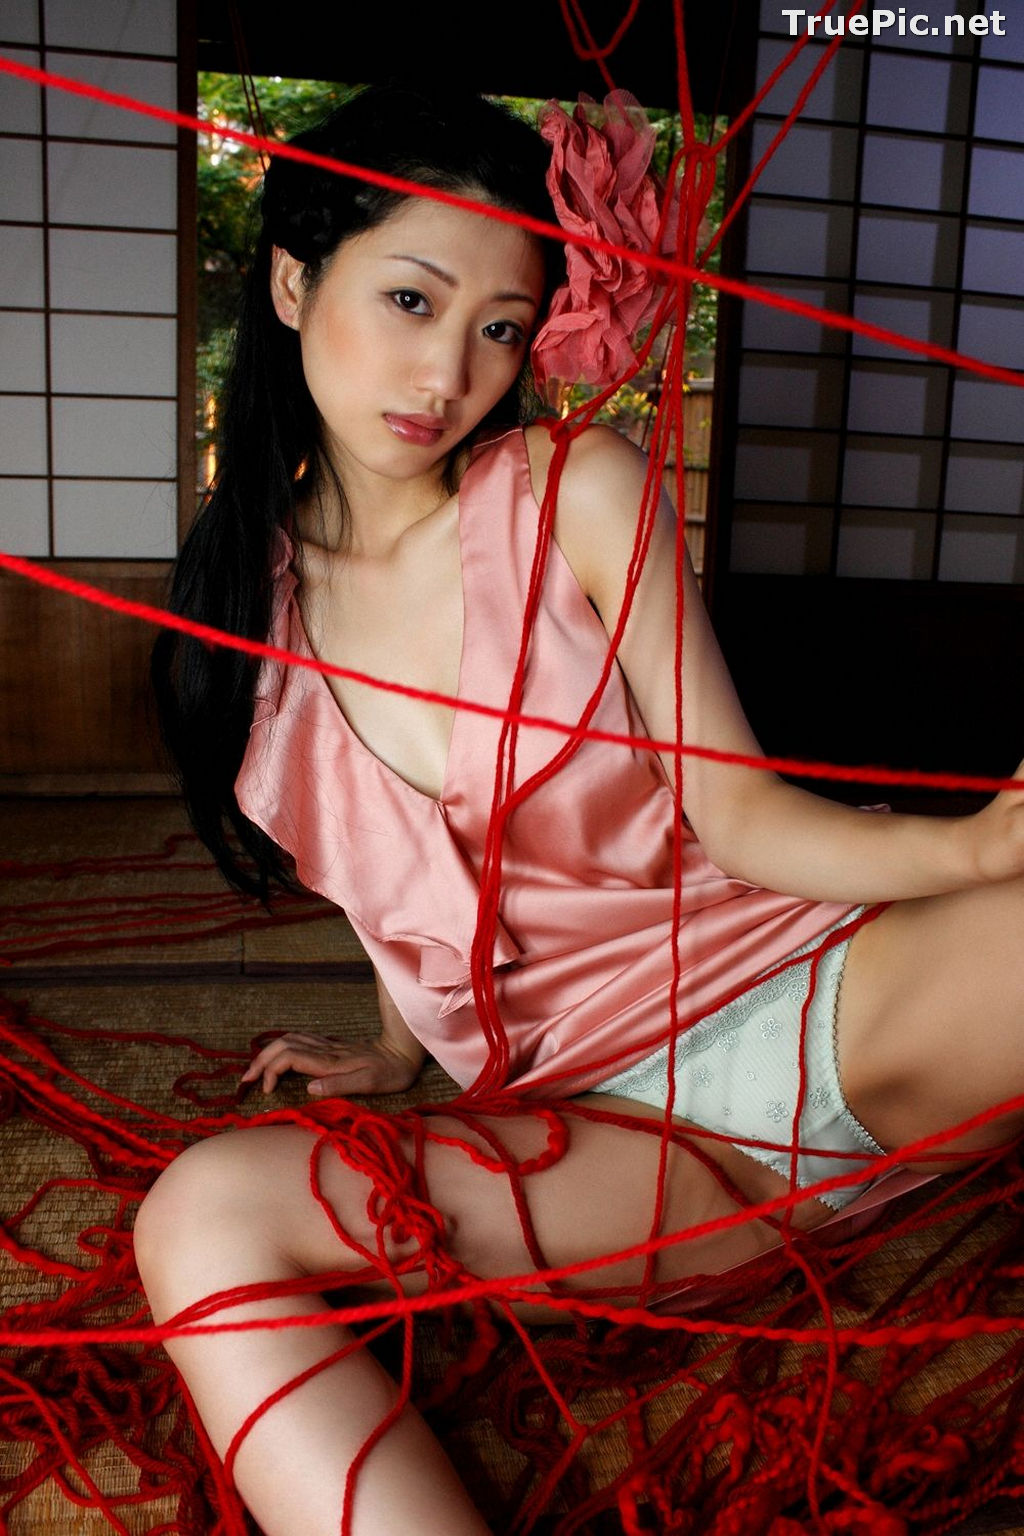 Image [YS Web] Vol.525 - Japanese Actress and Gravure Idol - Mitsu Dan - TruePic.net - Picture-79